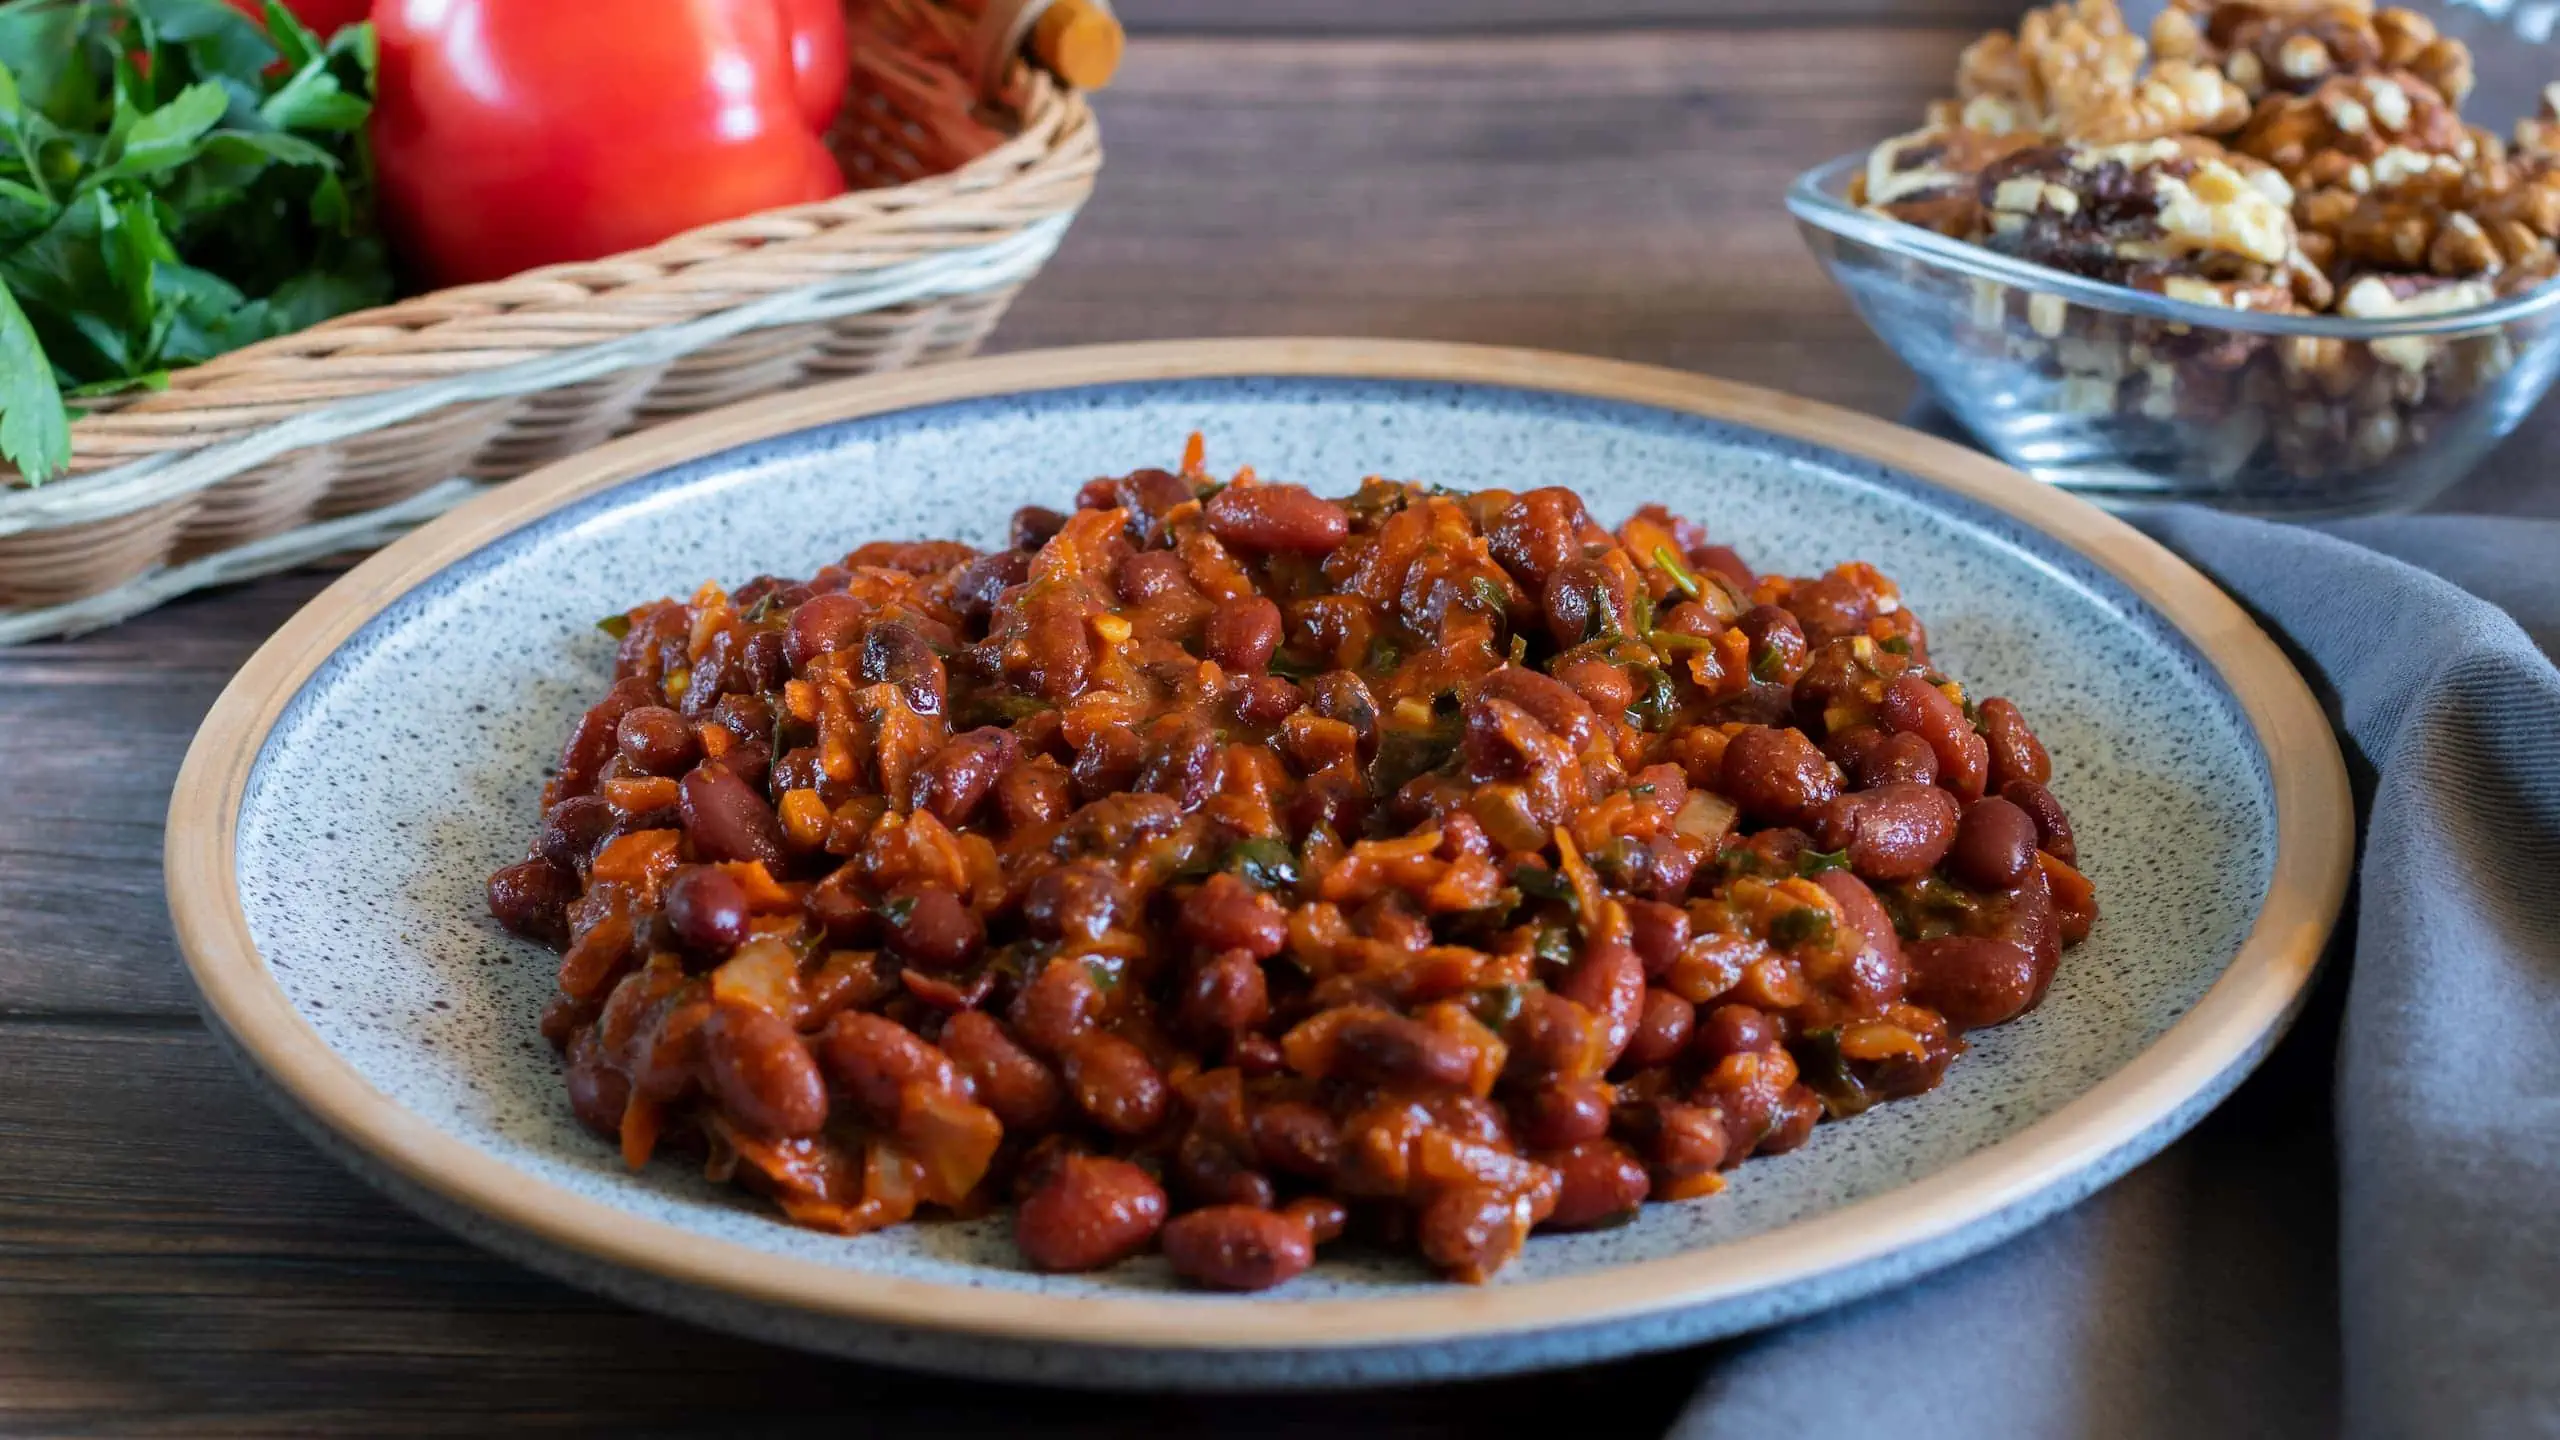 Our version of bush beans chili recipe